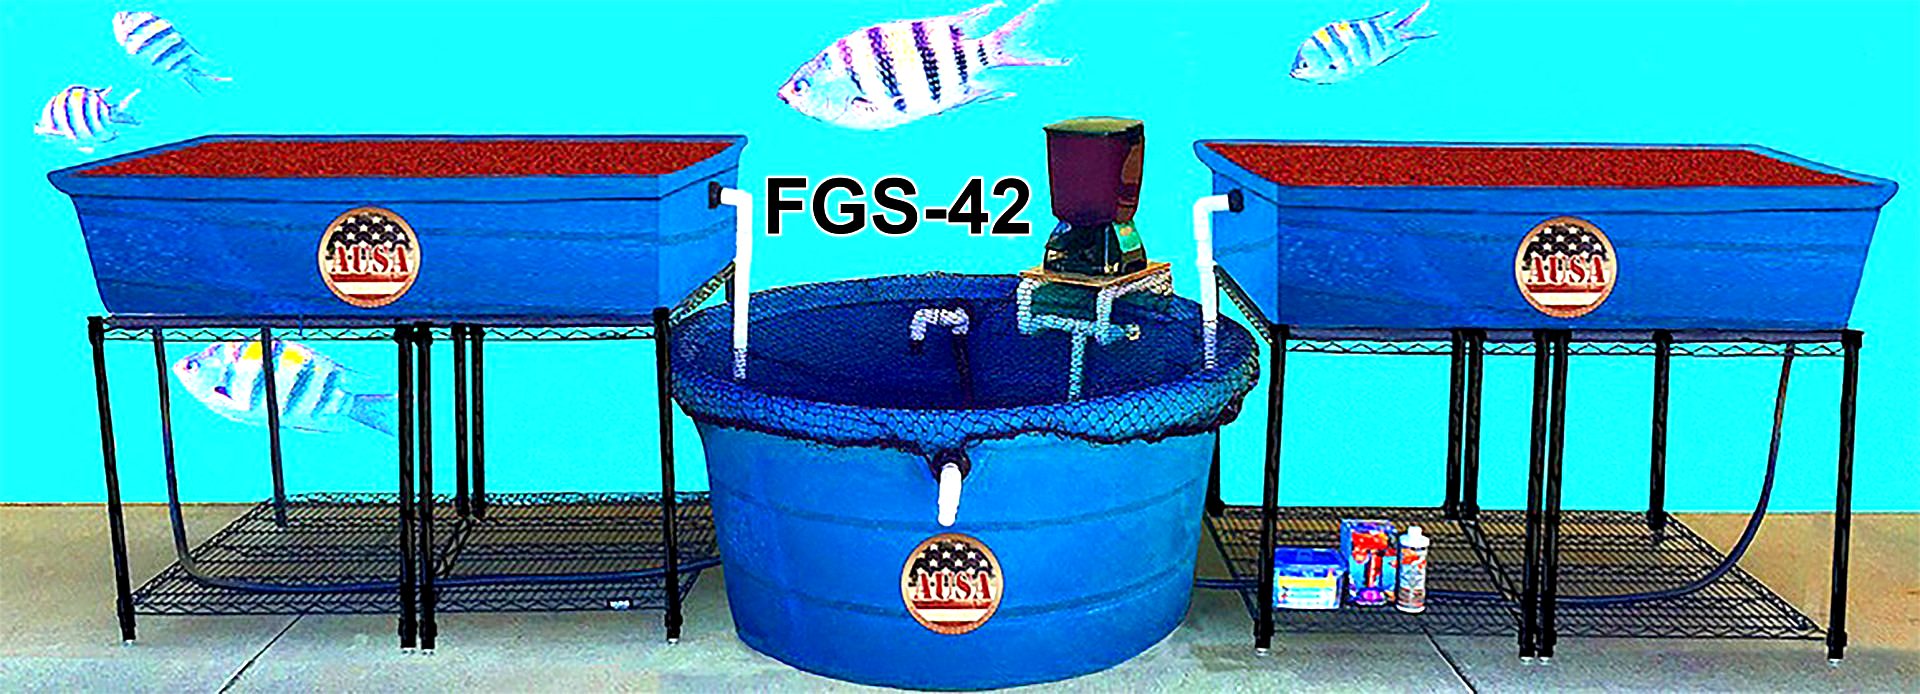 Aquaponics Growing System, FGS-42